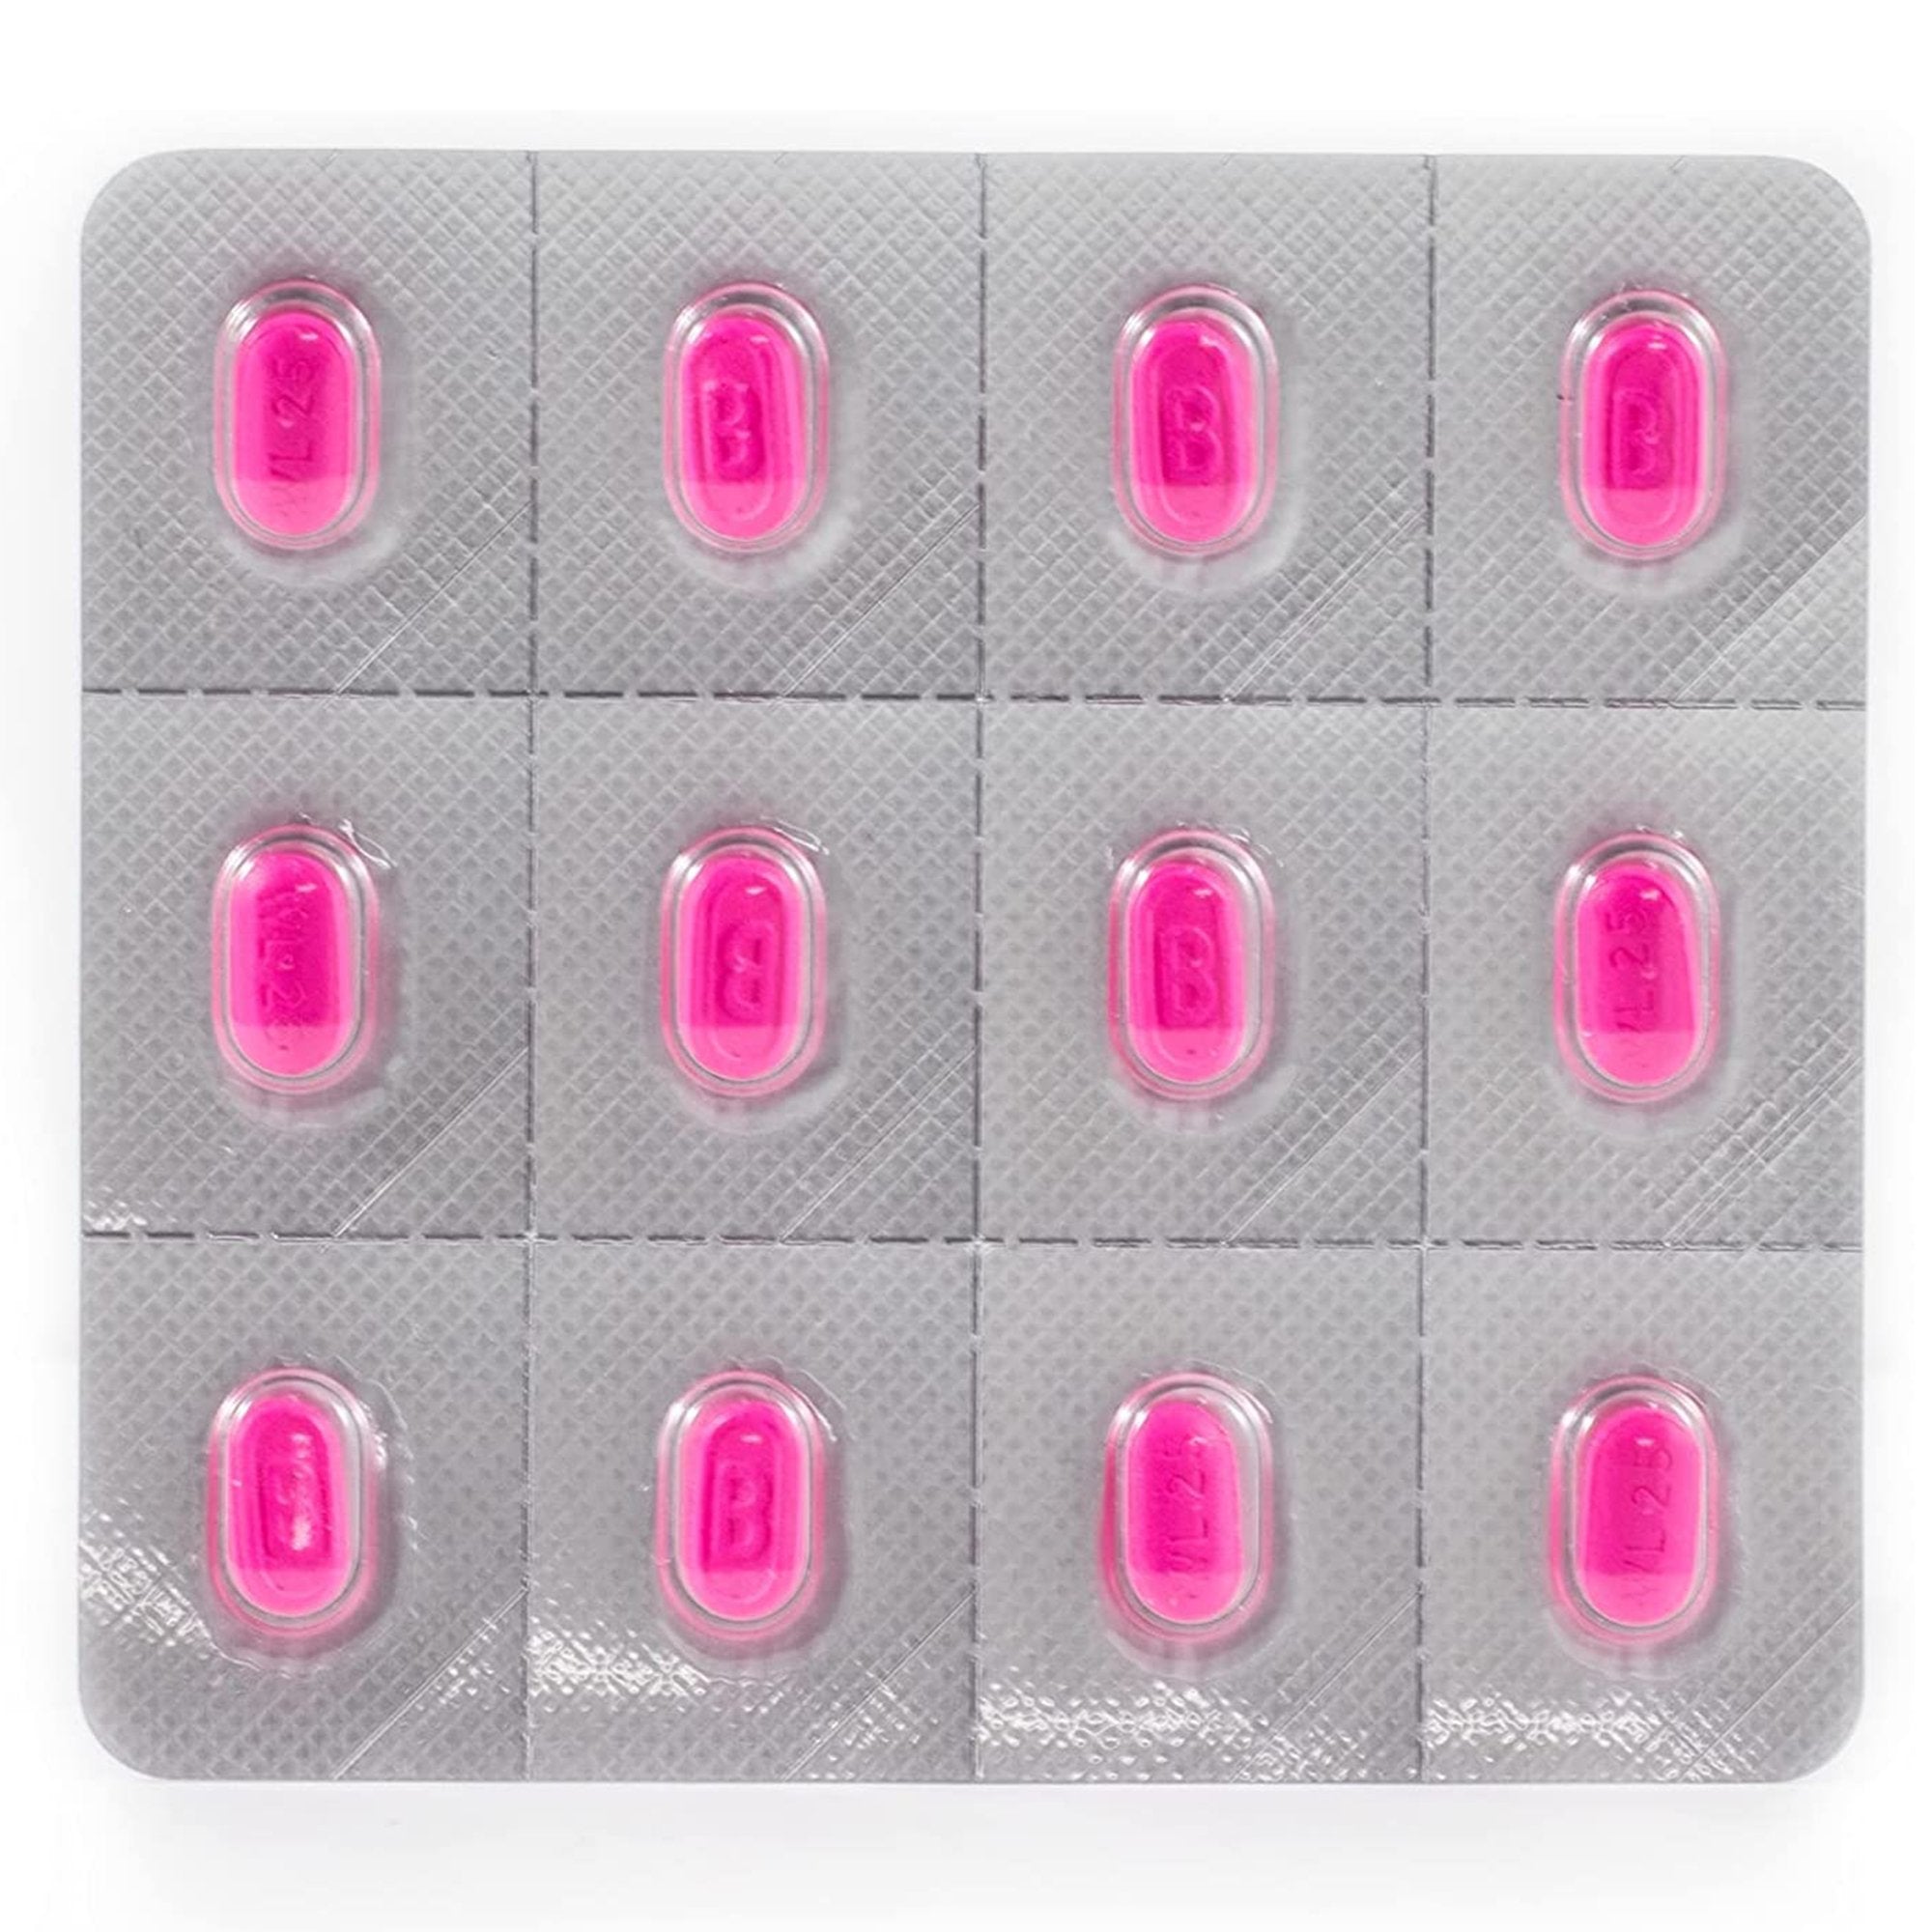 Allergy Relief Benadryl 25 mg Strength Tablet 24 per Box